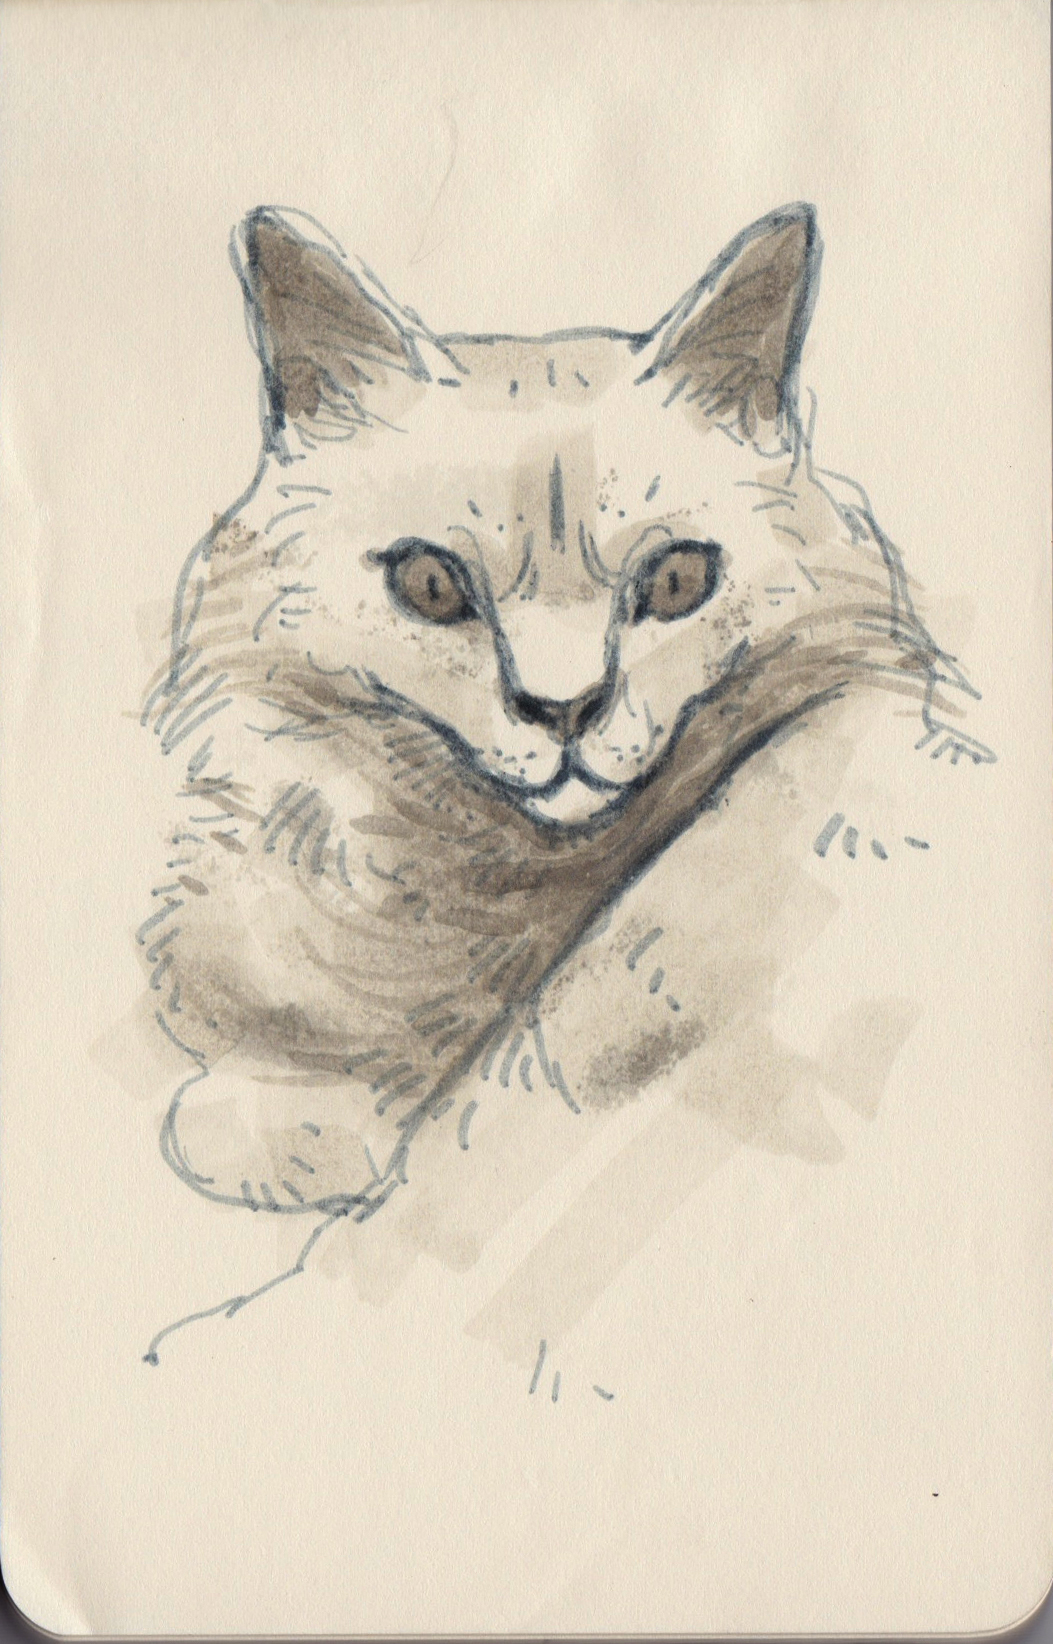 Cat skottish fold moleskine sketch